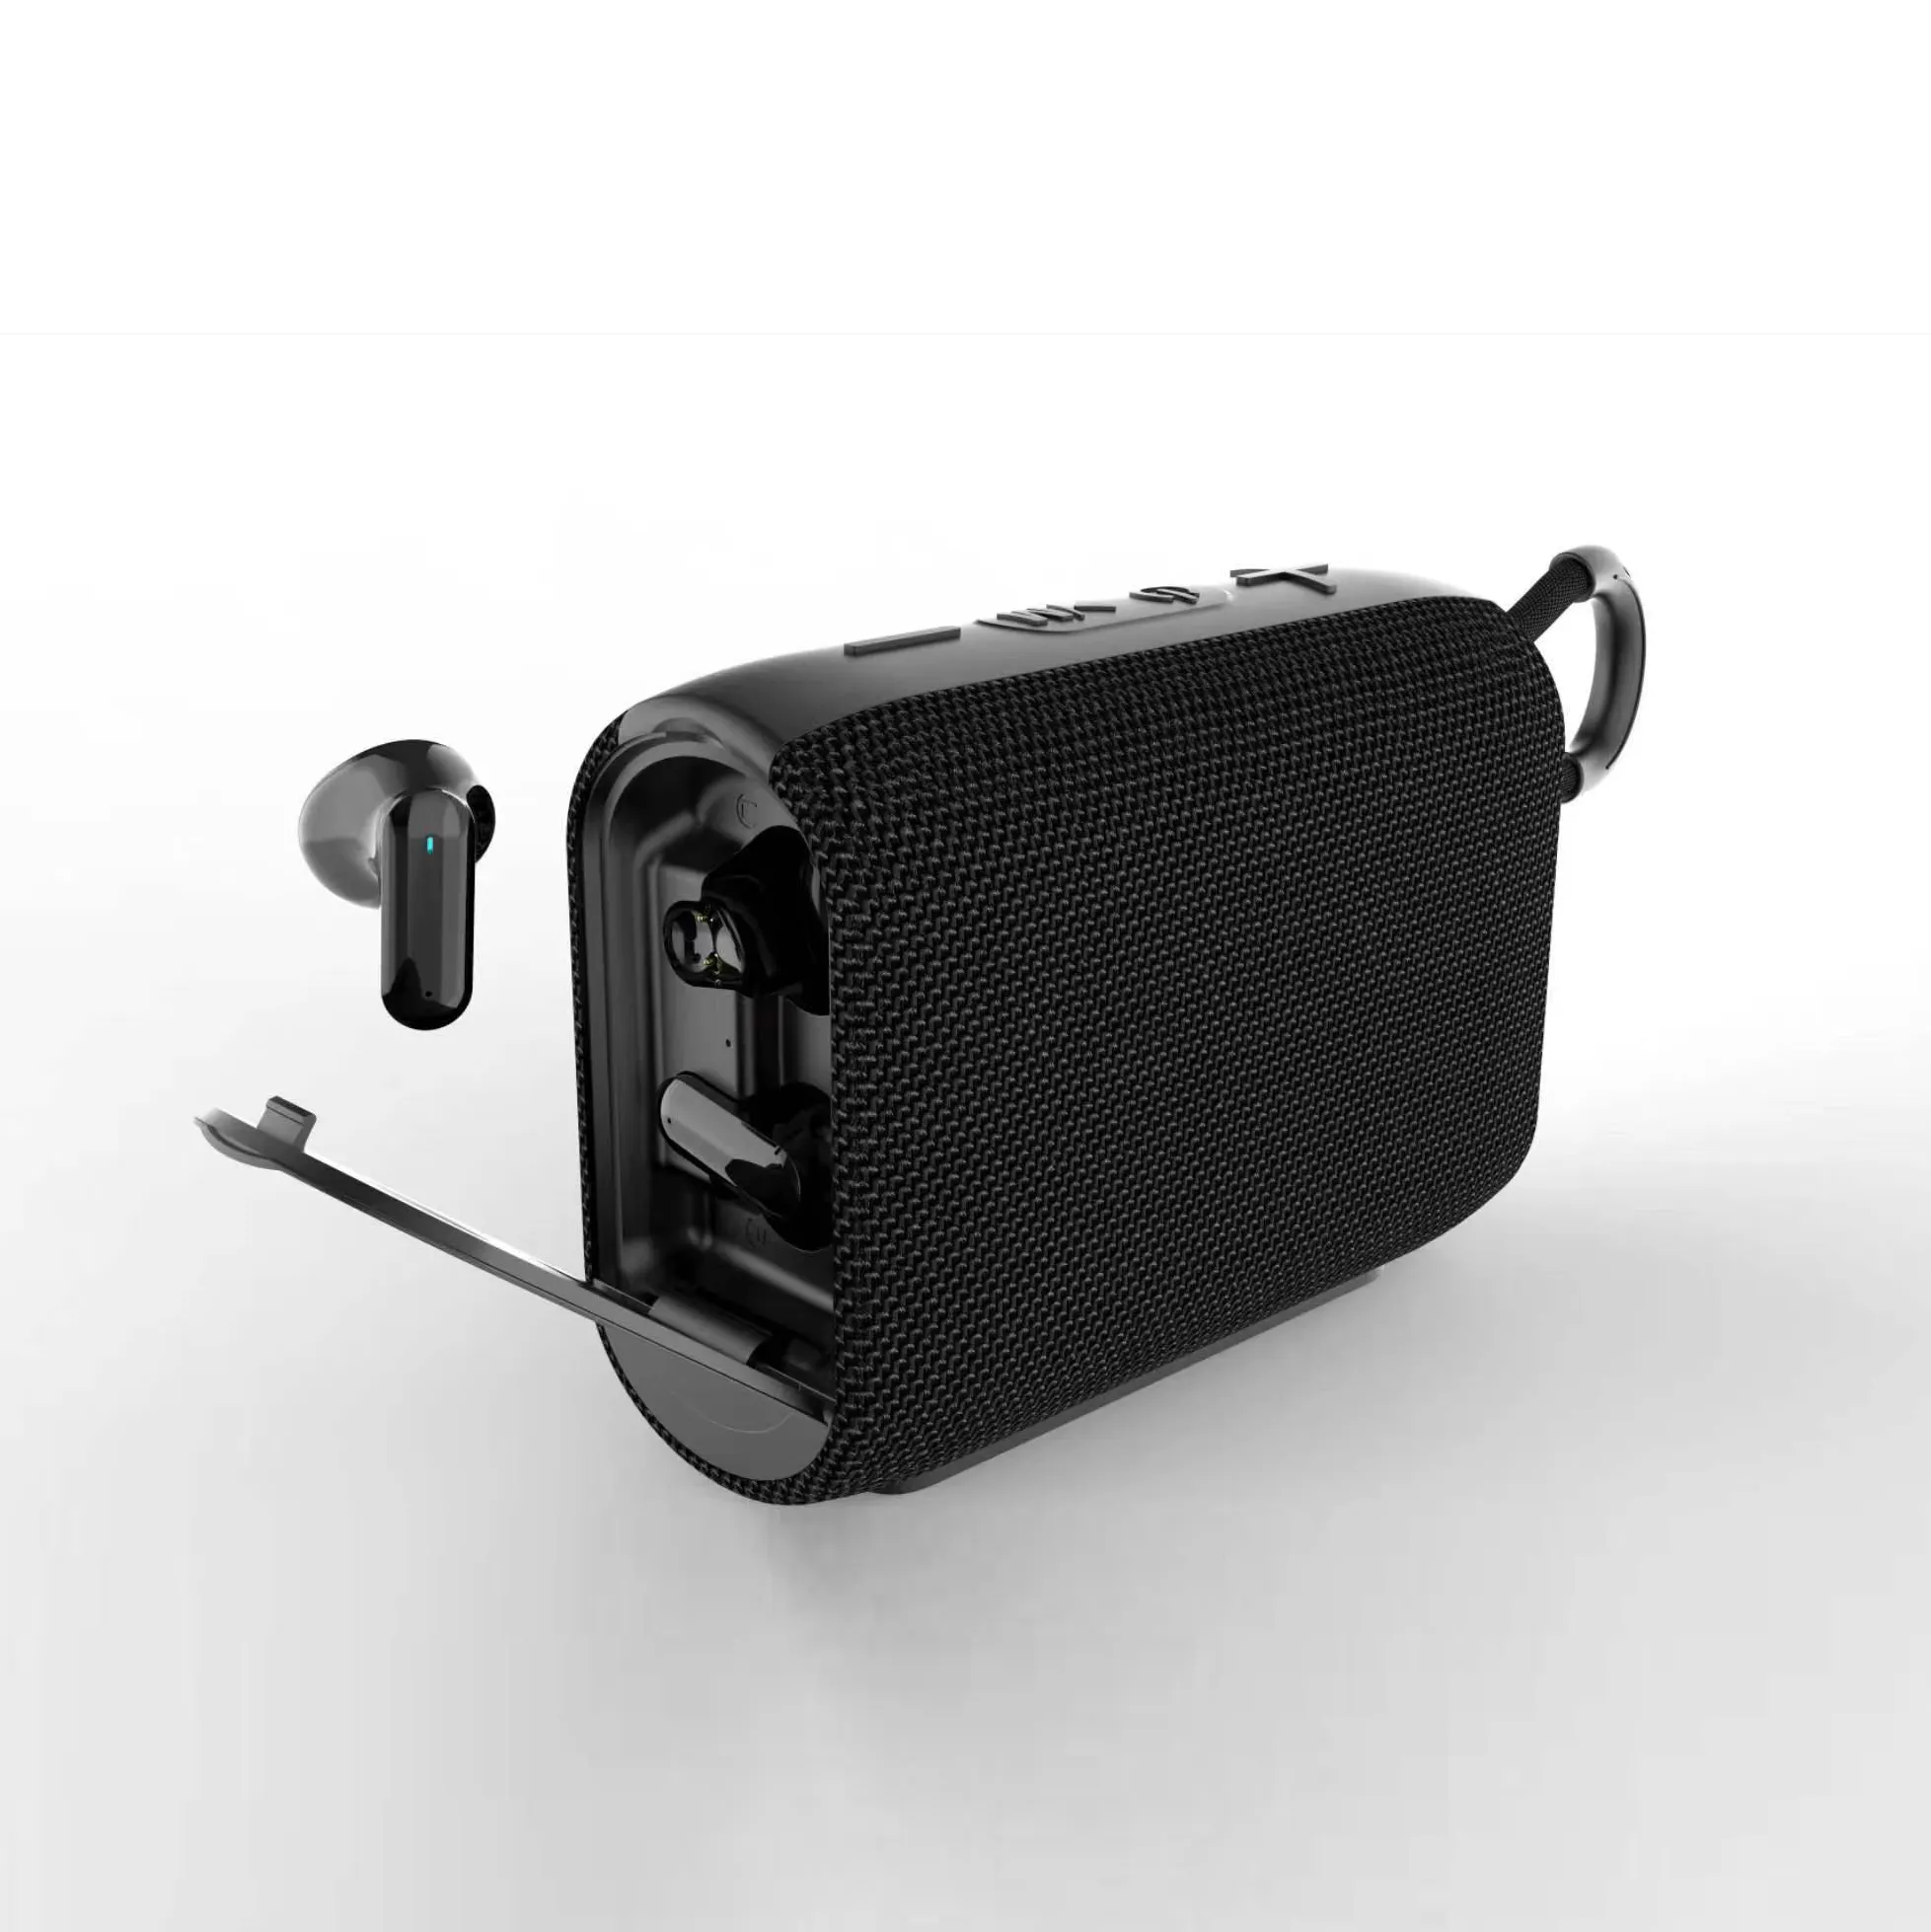 Mini Factory New Products 2 In 1 Wireless Bluetooth Speaker Ear Headphones Apple Earphones Mini Earbuds with Portable Speakers